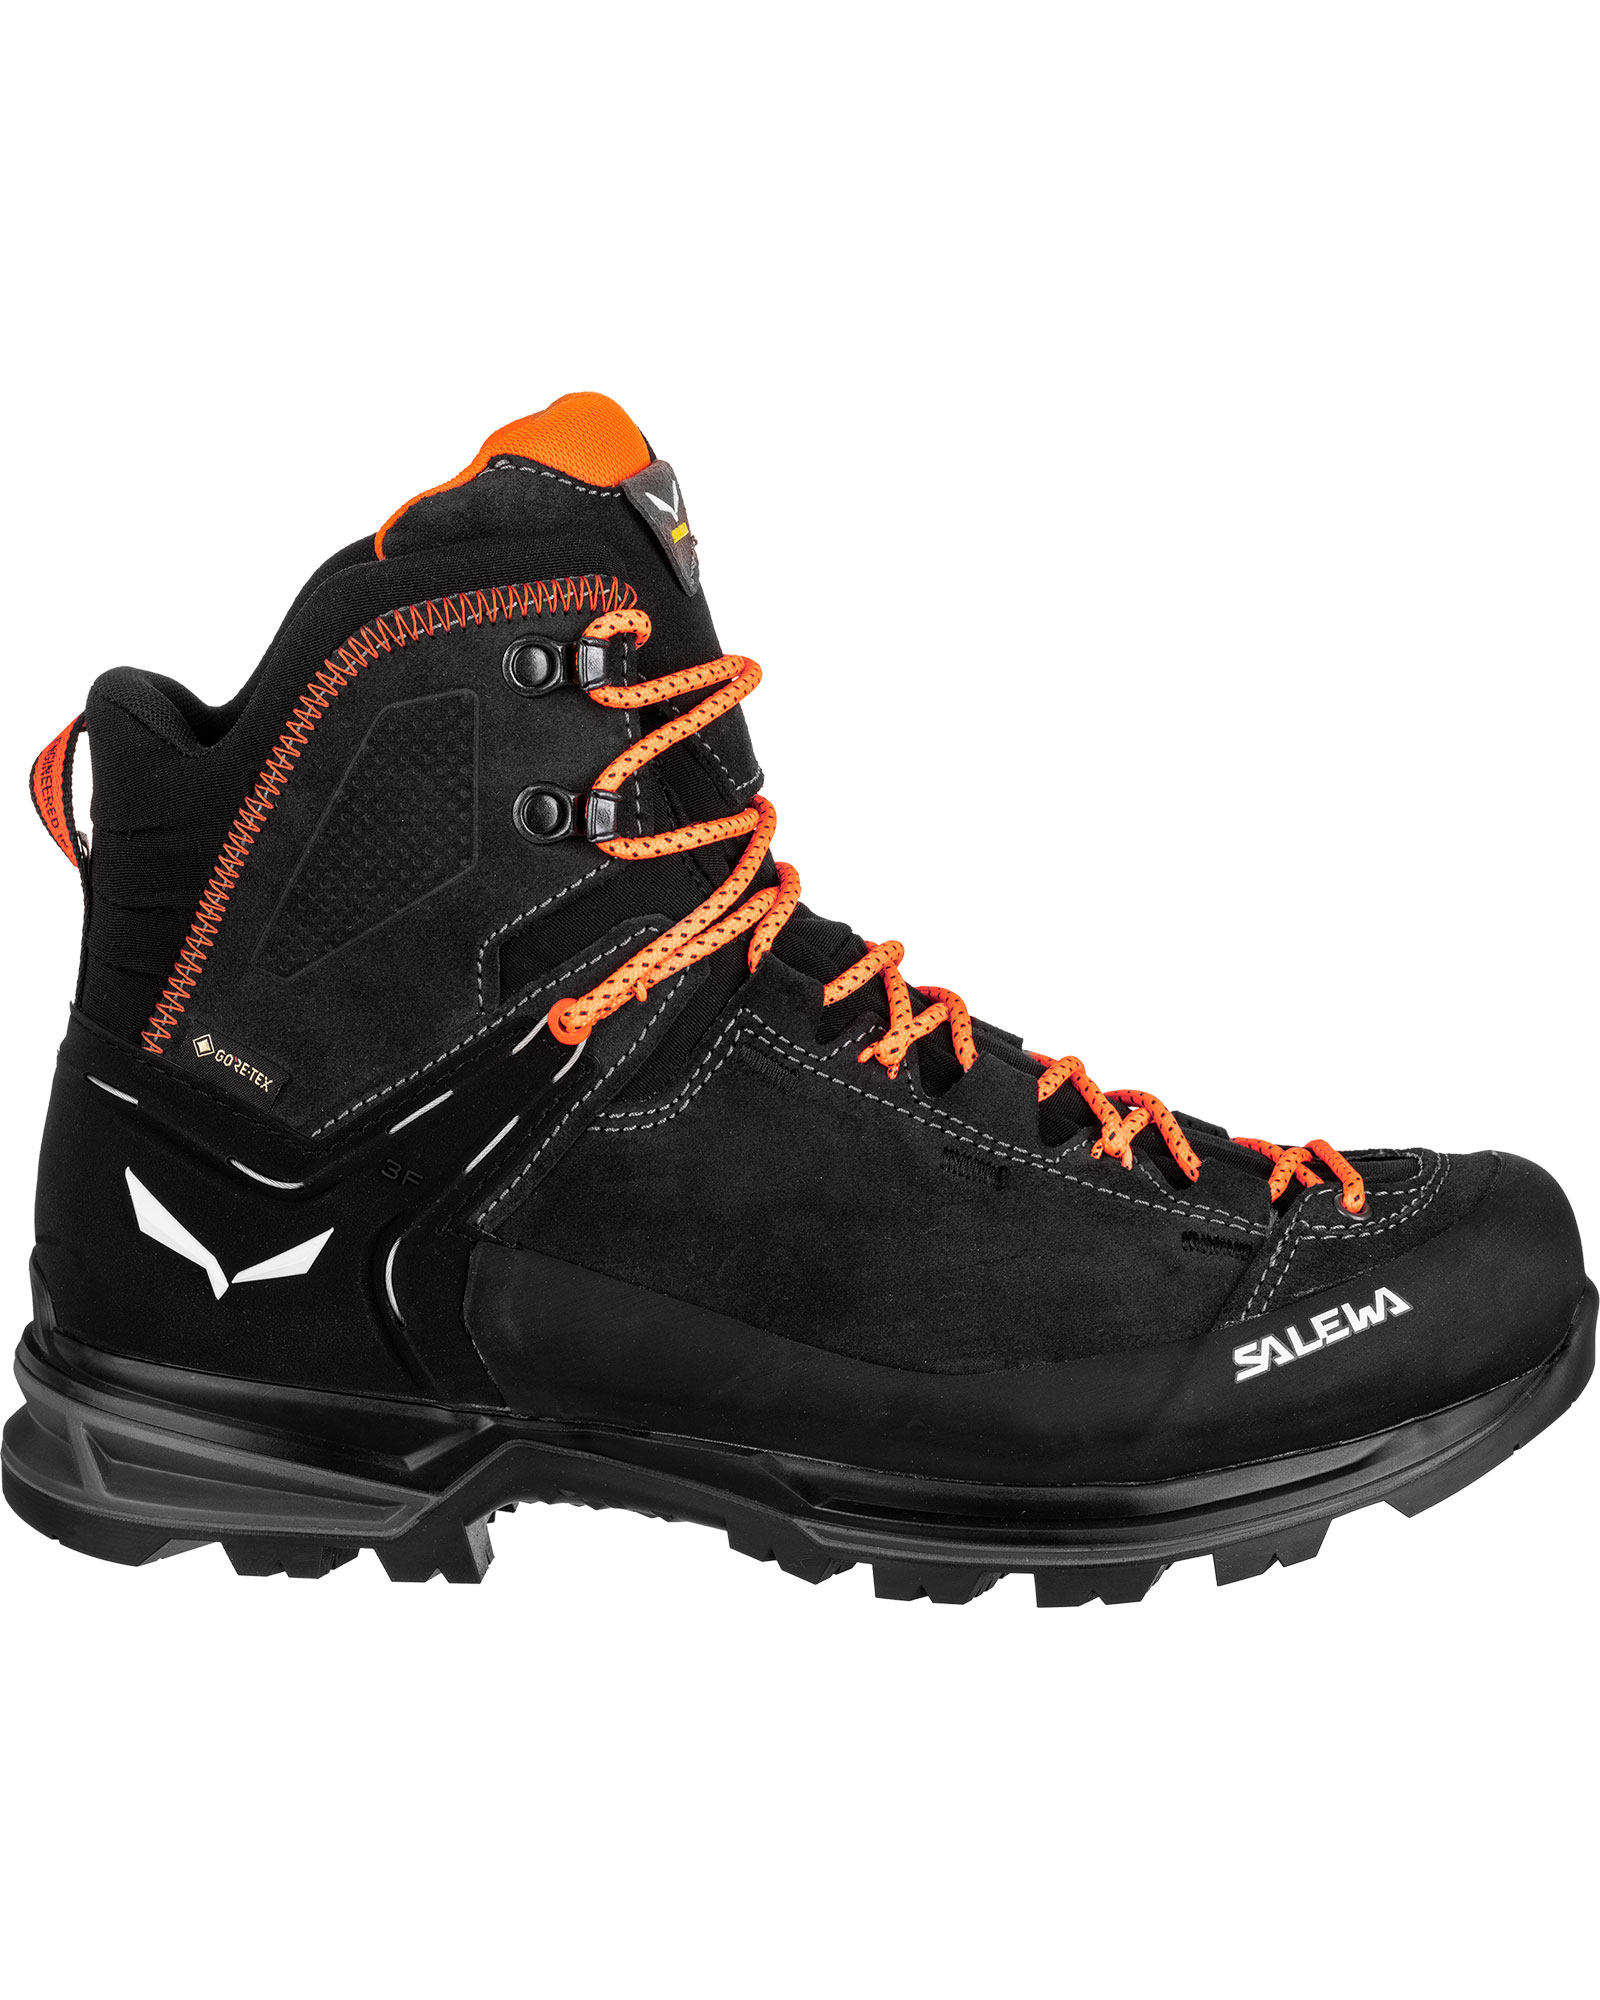 Salewa Mountain Trainer 2 Mid GORE TEX Men’s Boots - Onyx UK 8.5